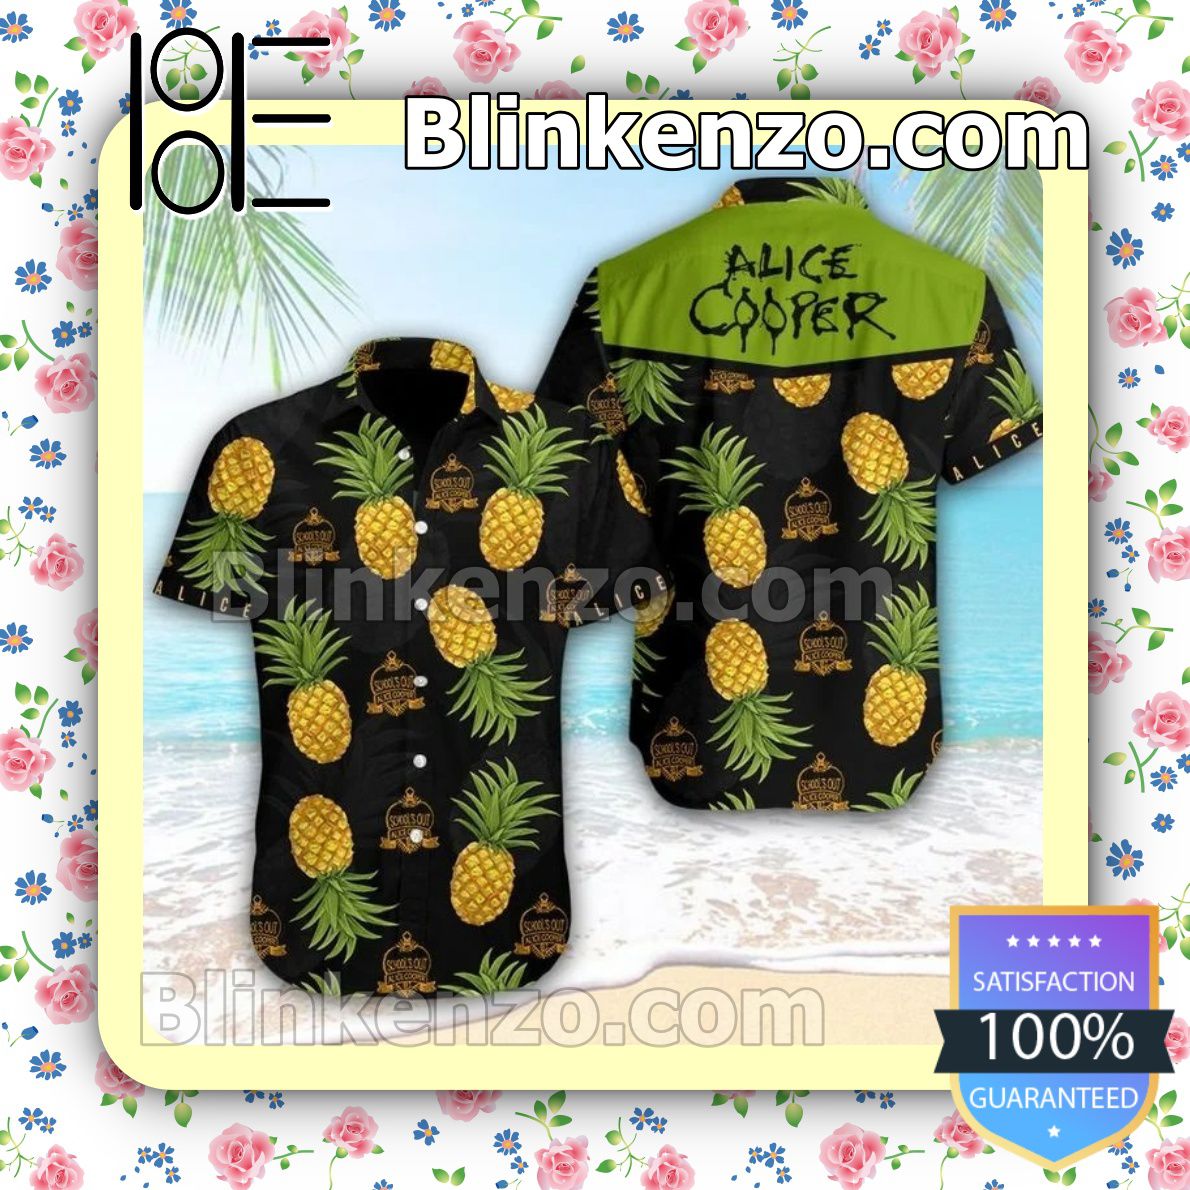 New Alice Cooper Pineapple Black Summer Shirts